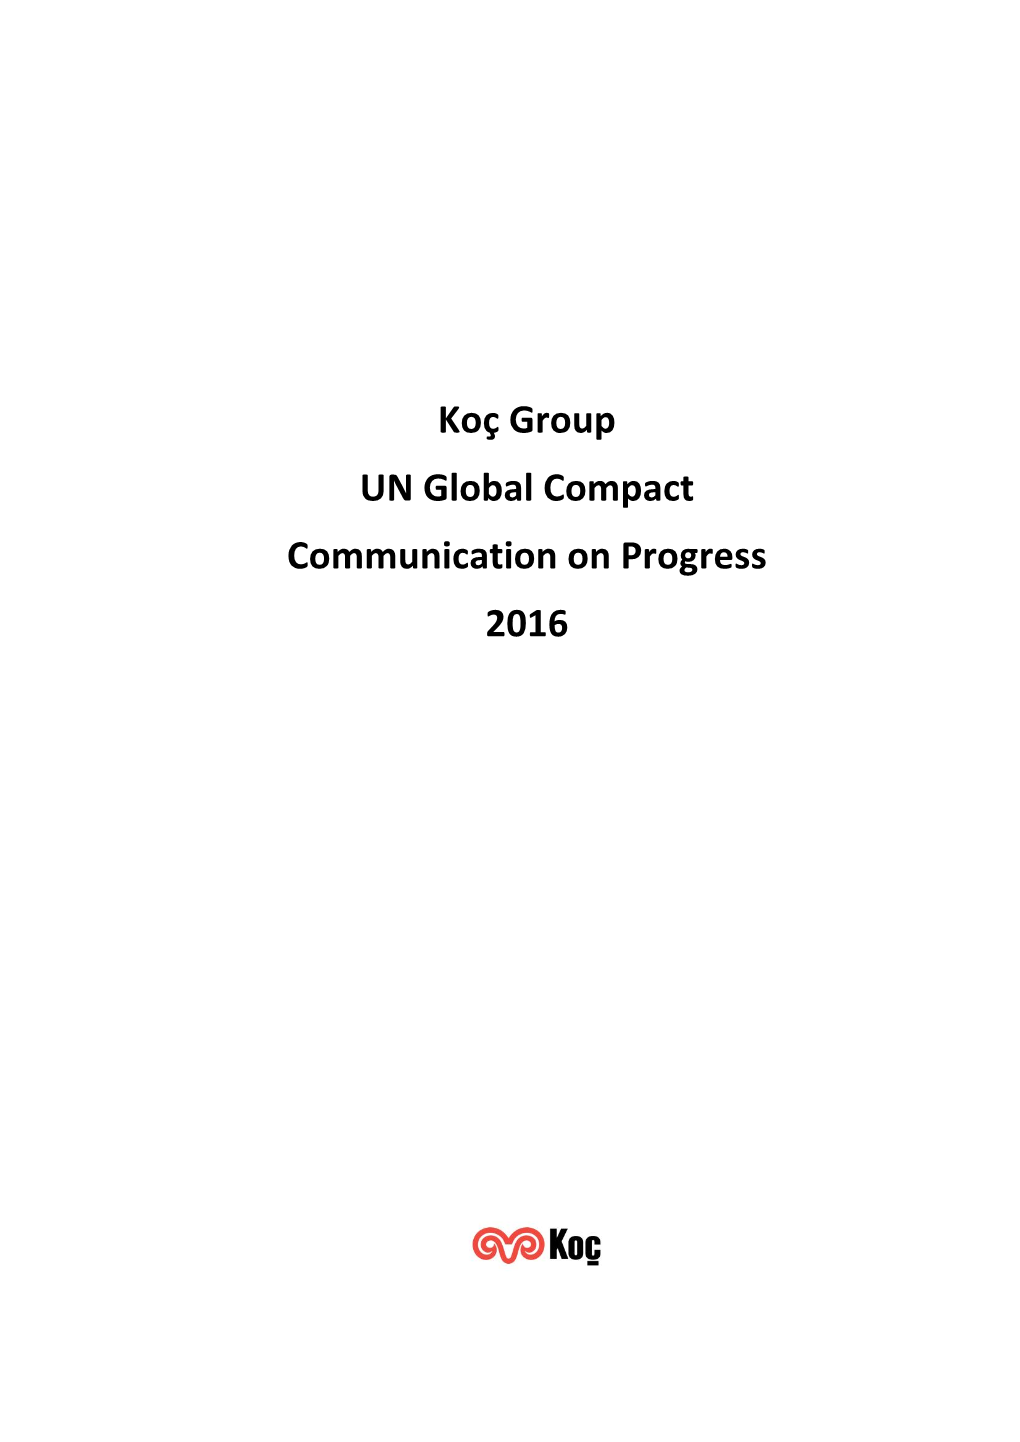 Koç Group UN Global Compact Communication on Progress 2016